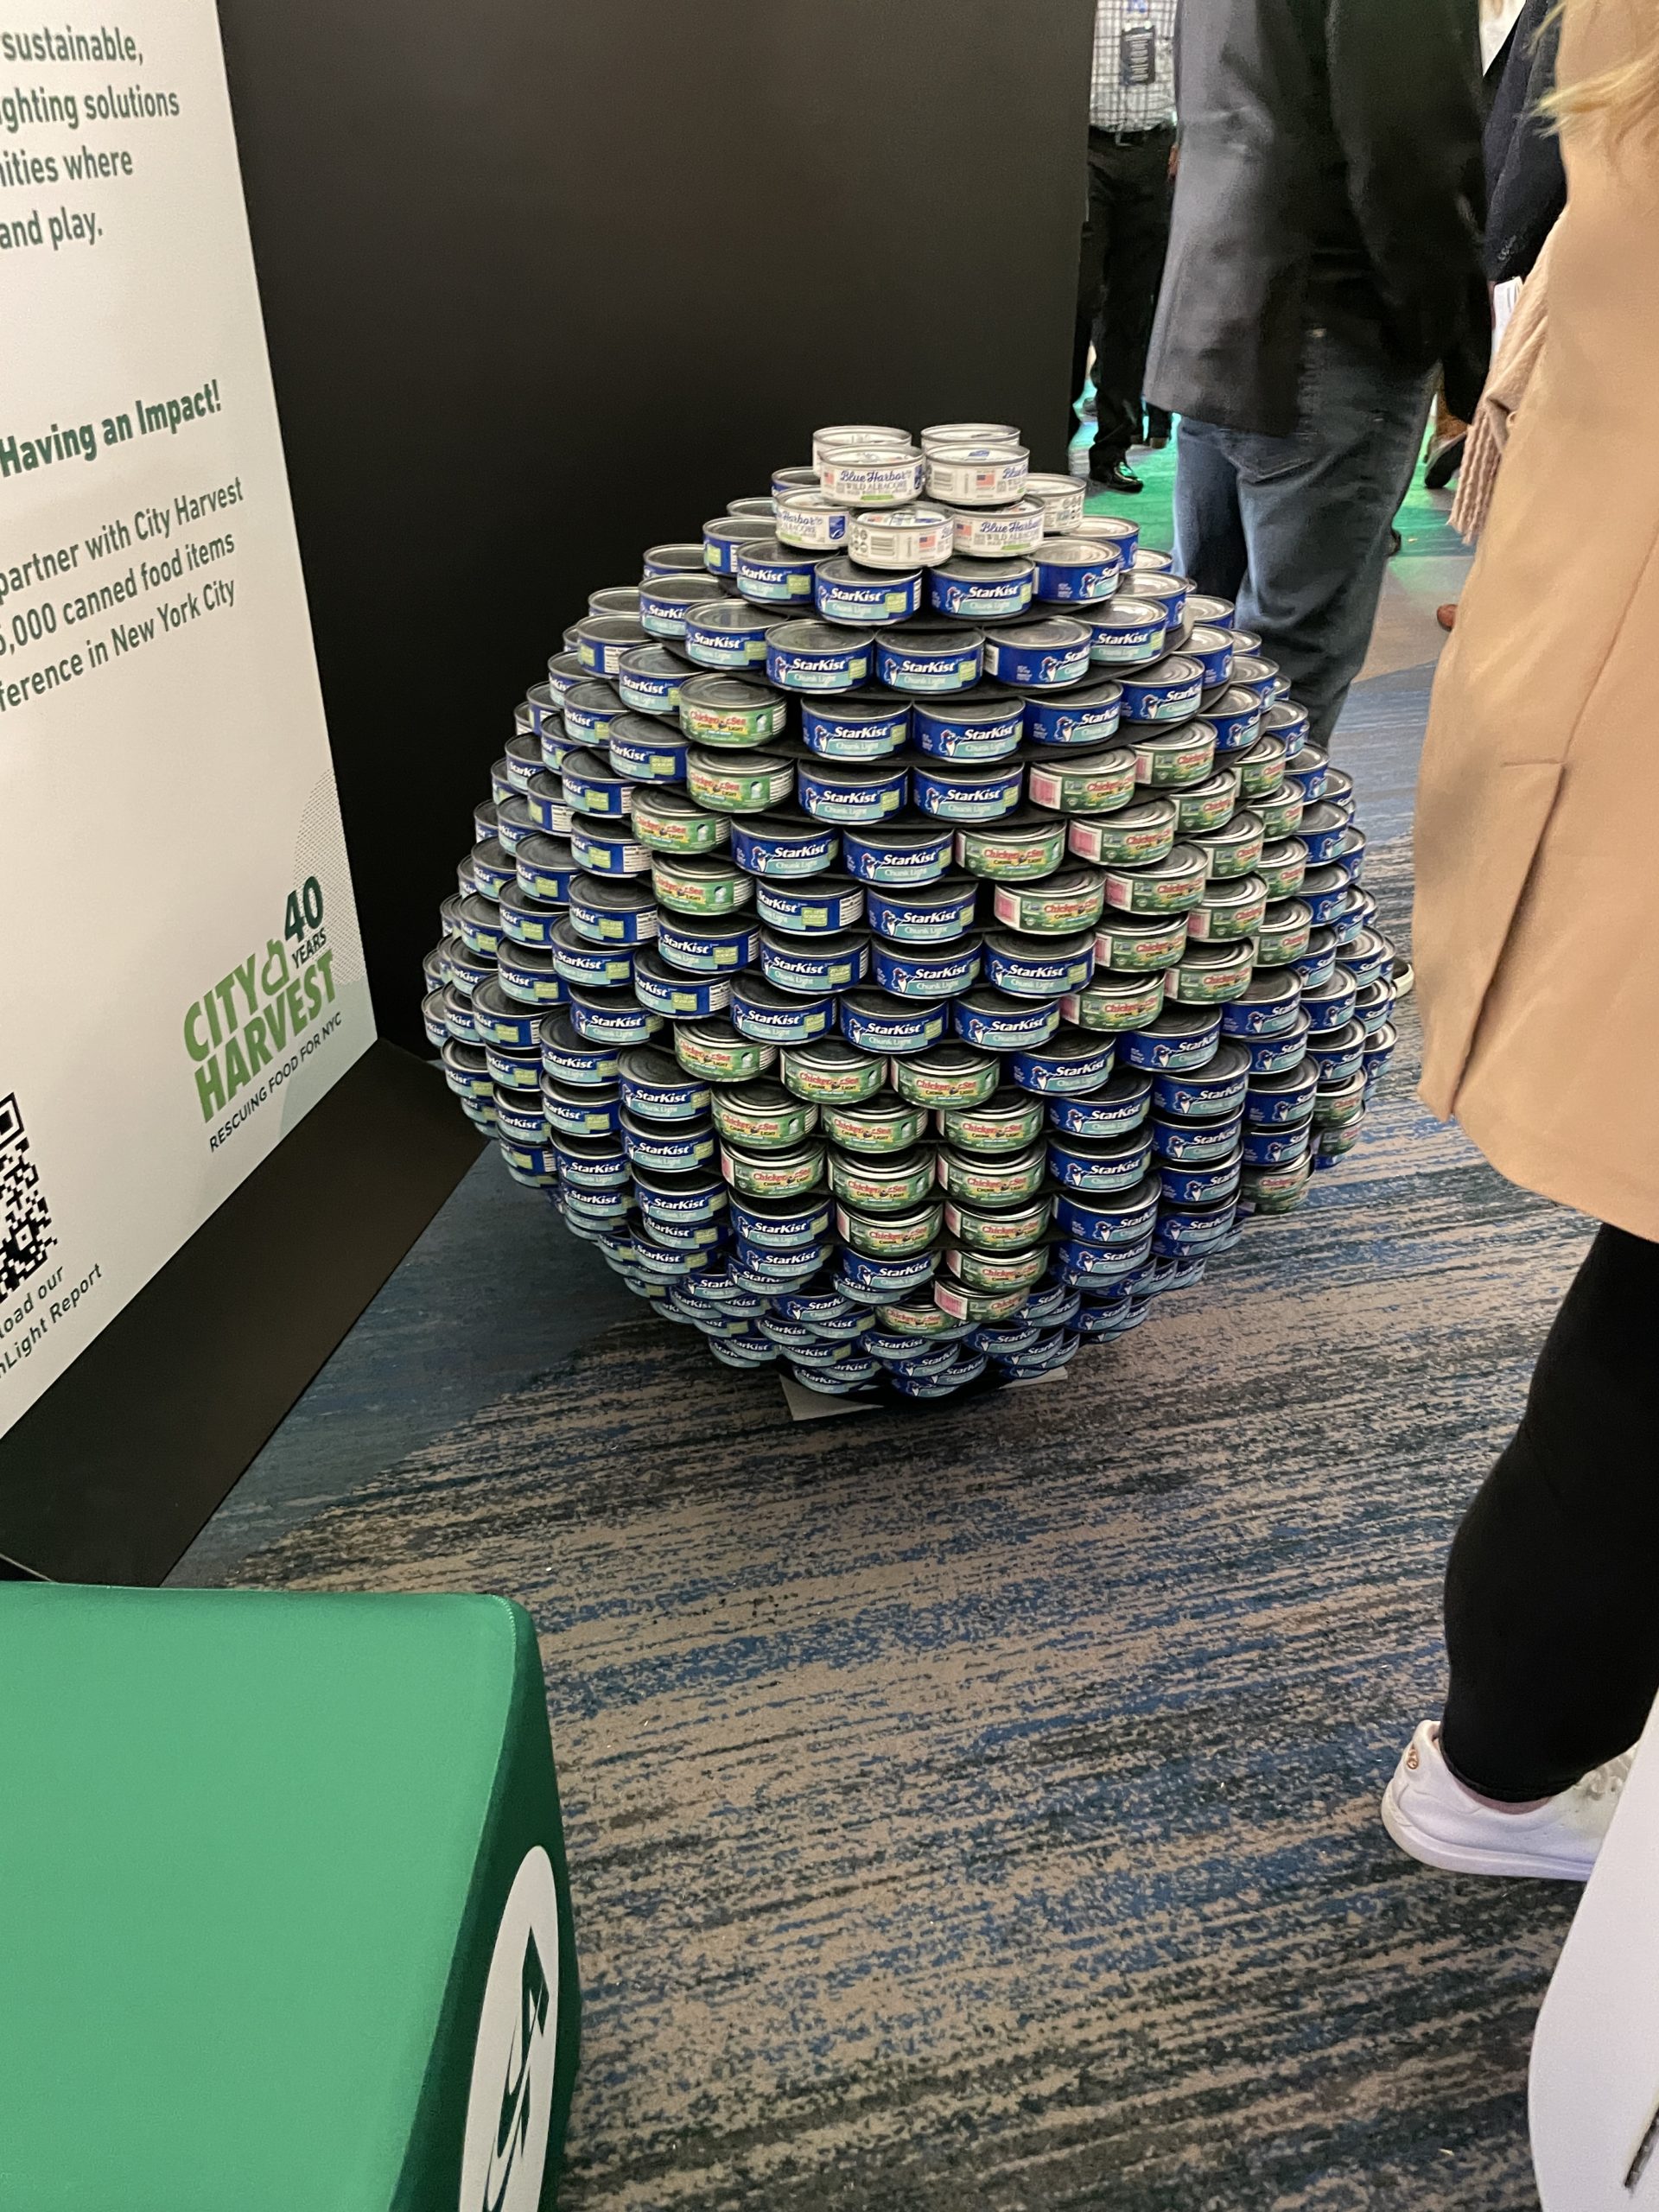 Acuity sorts cans of tuna in shape of globe